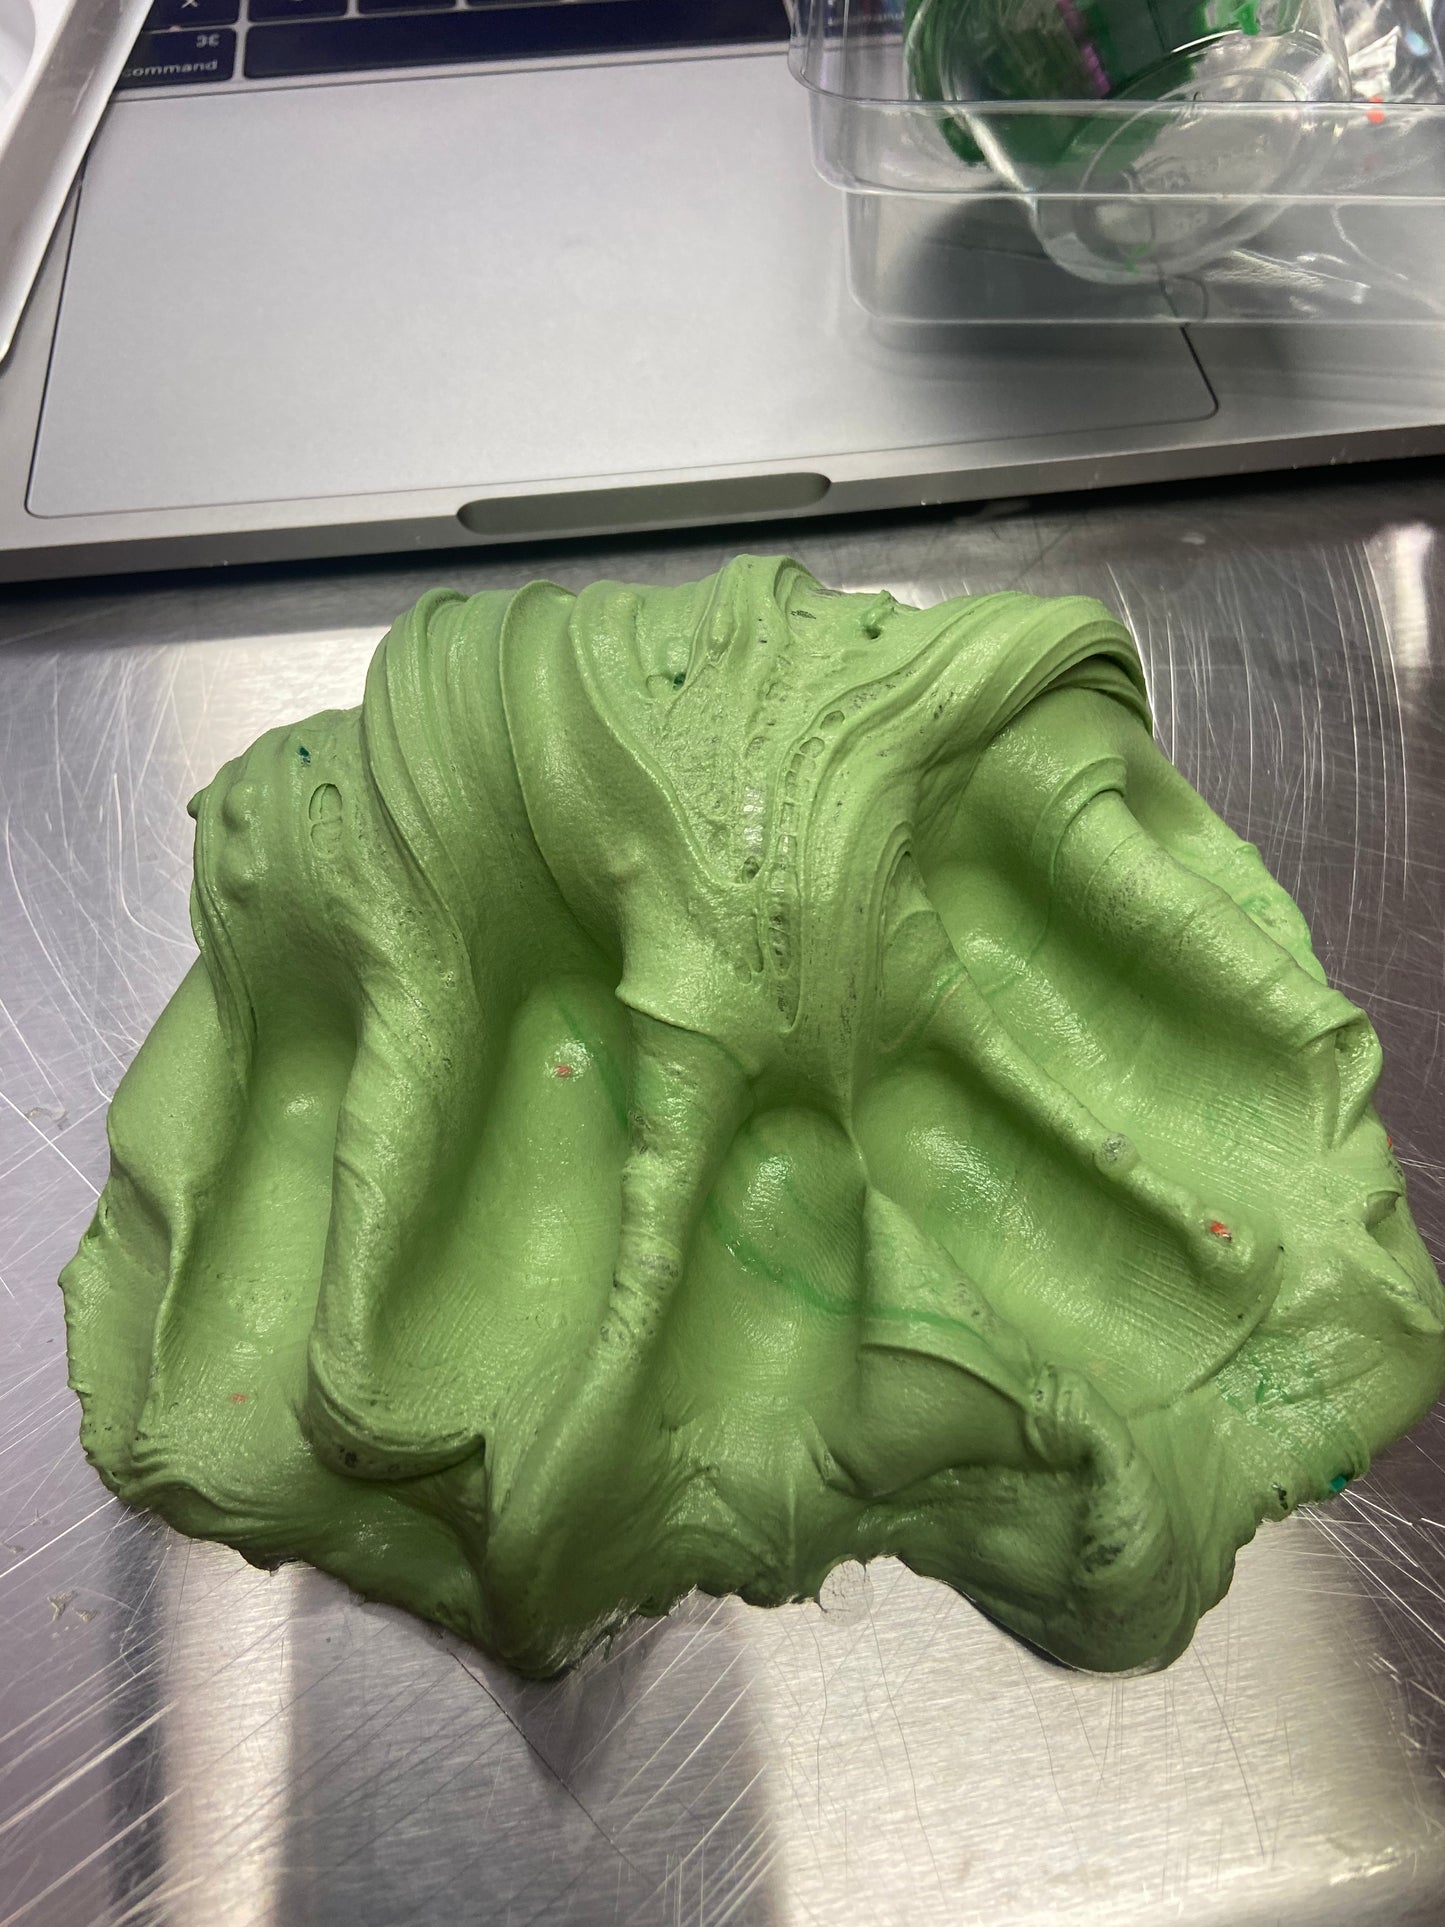 Green Christmas Cookies DIY Slime Kit